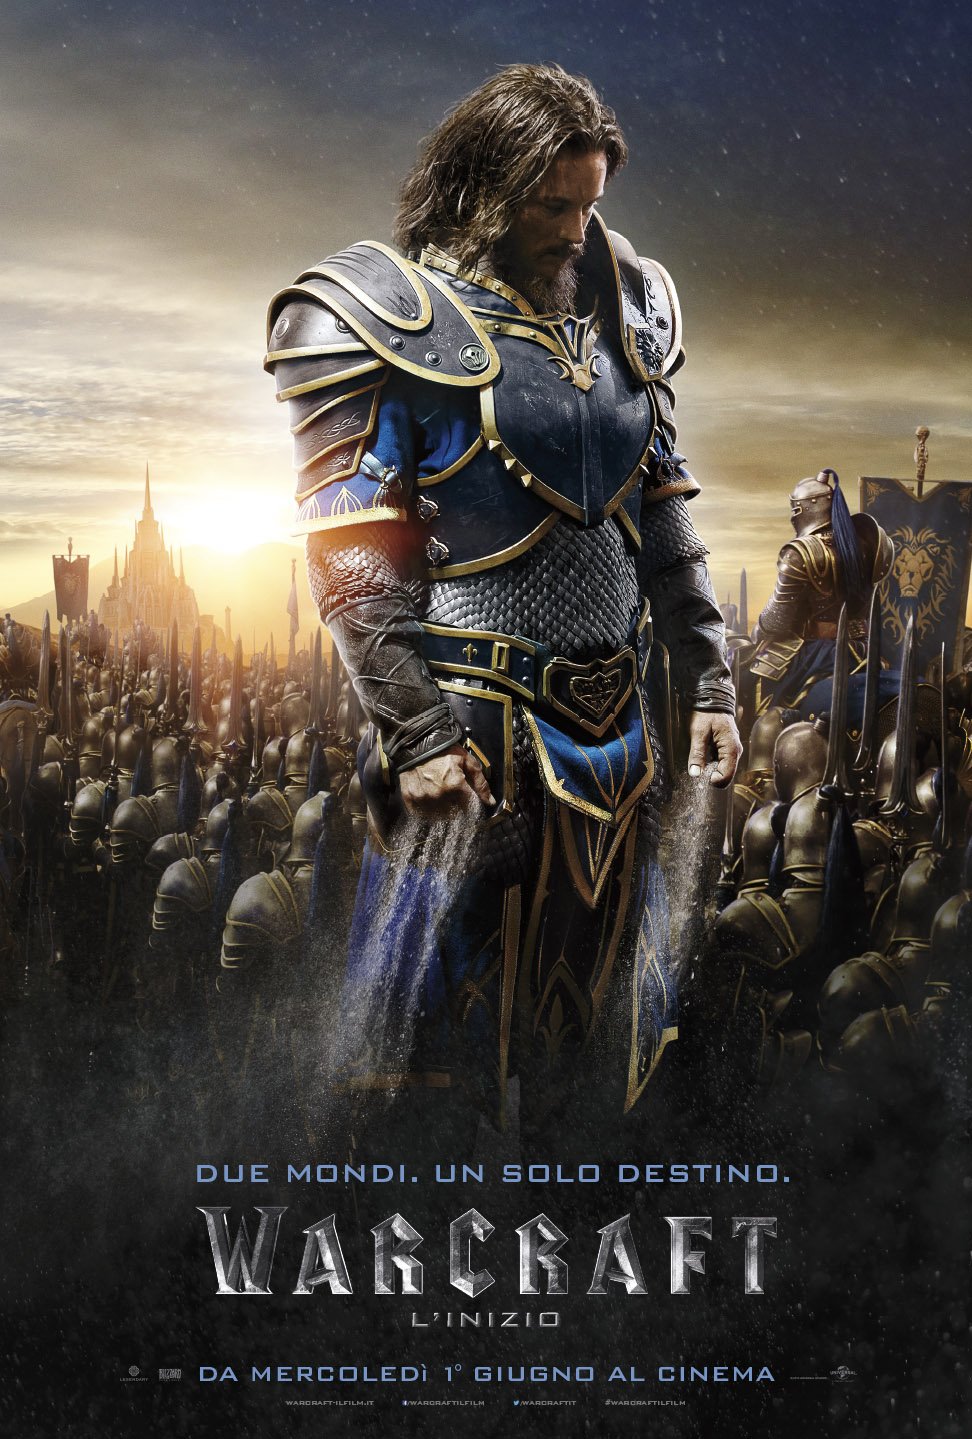 Warcraft Online 1 Sht Lothar Italy